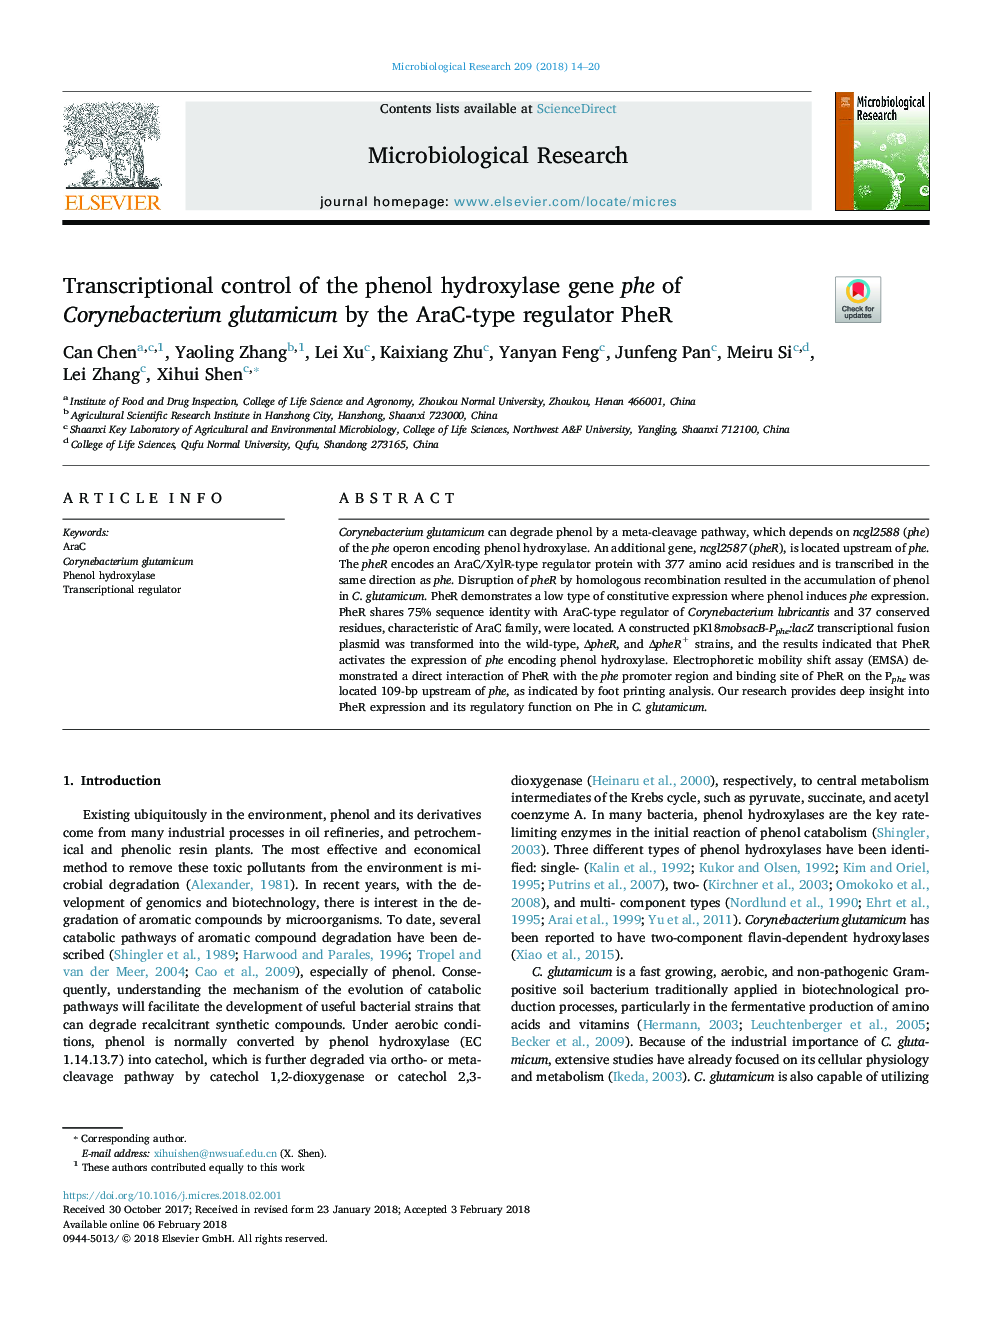 Transcriptional control of the phenol hydroxylase gene phe of Corynebacterium glutamicum by the AraC-type regulator PheR